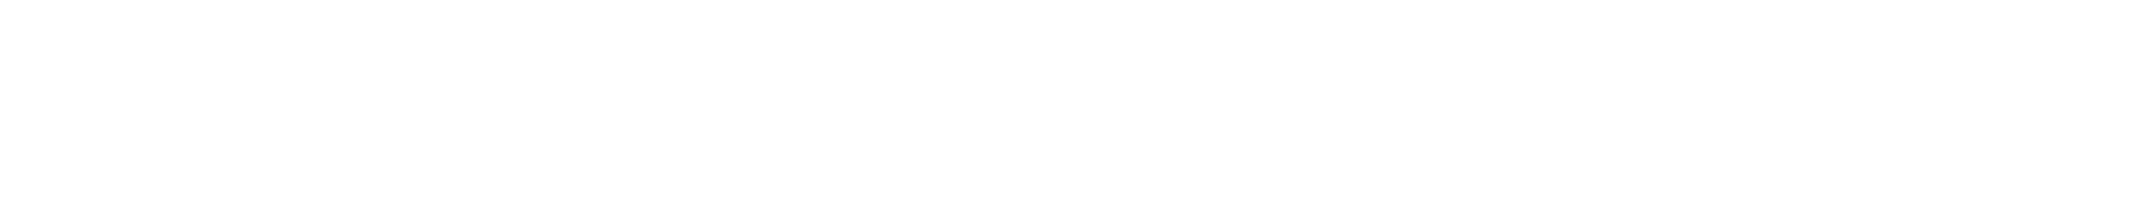 Металлопрокат и металлопродукция